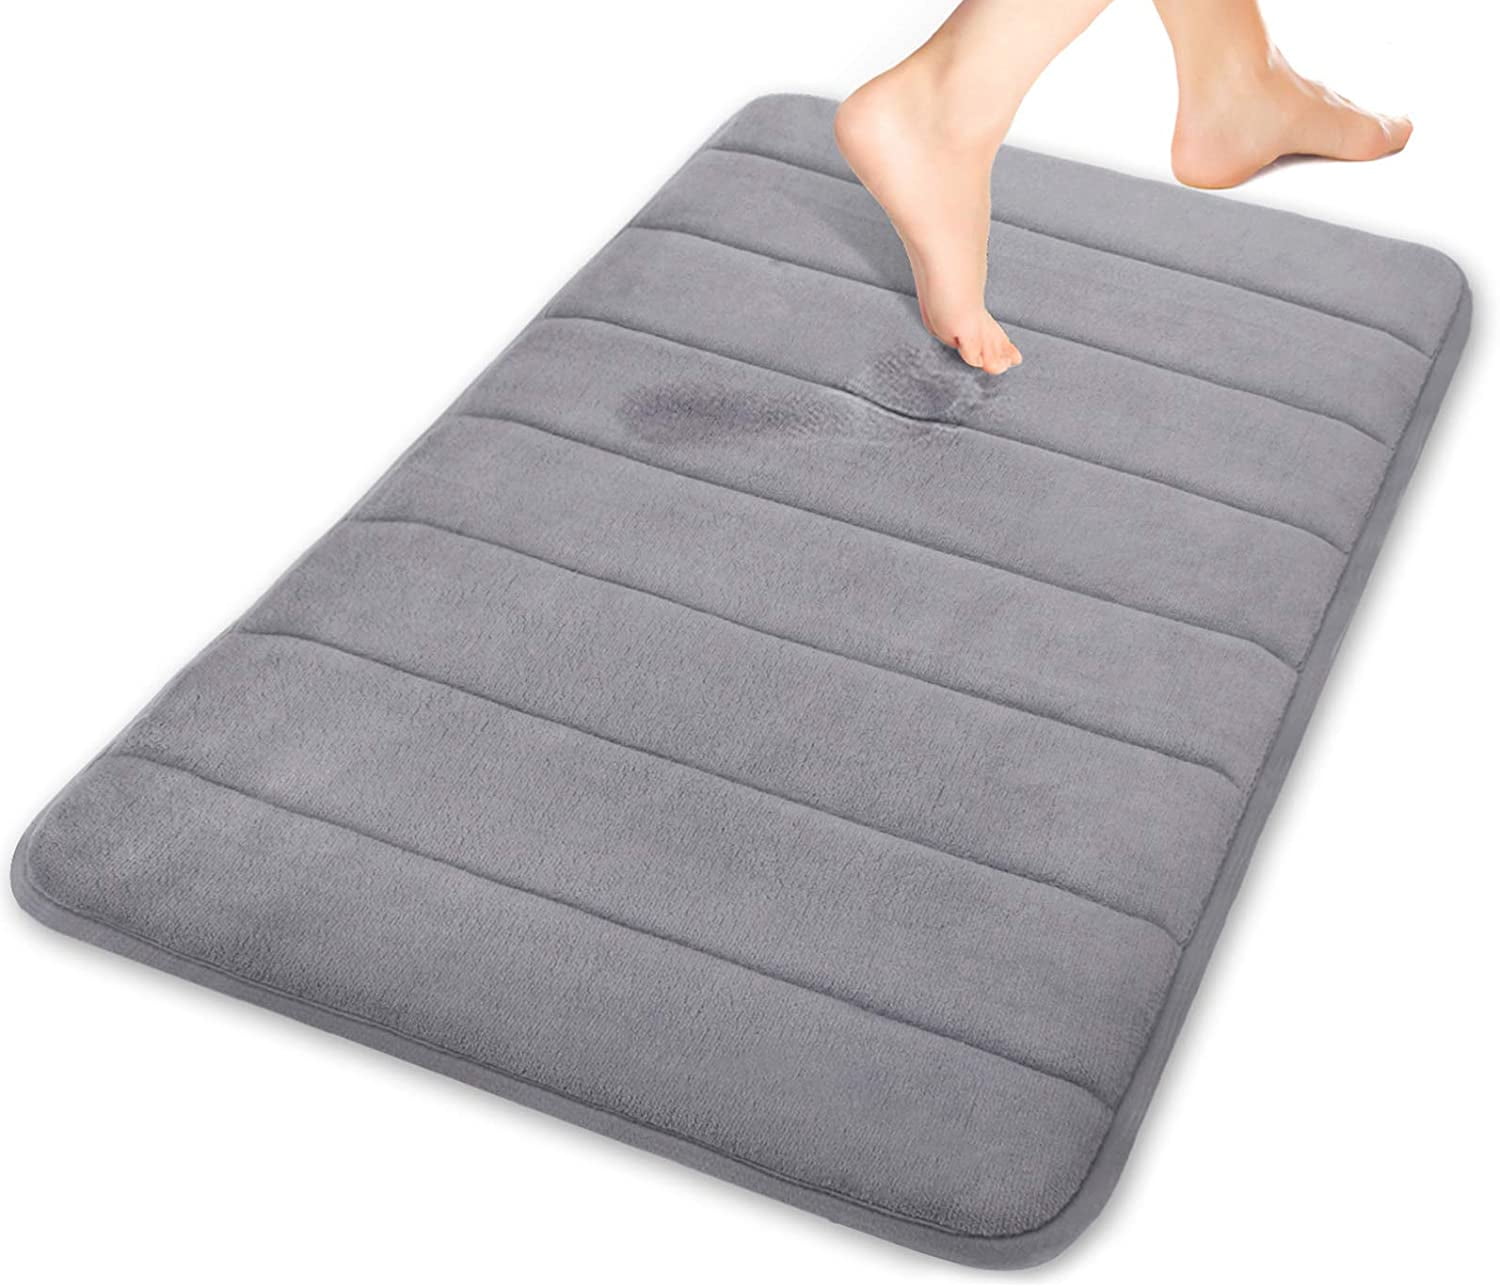 Memory Foam Soft Bathroom Bedroom Bath Mat Floor Rug Carpet With Non Slip Back 